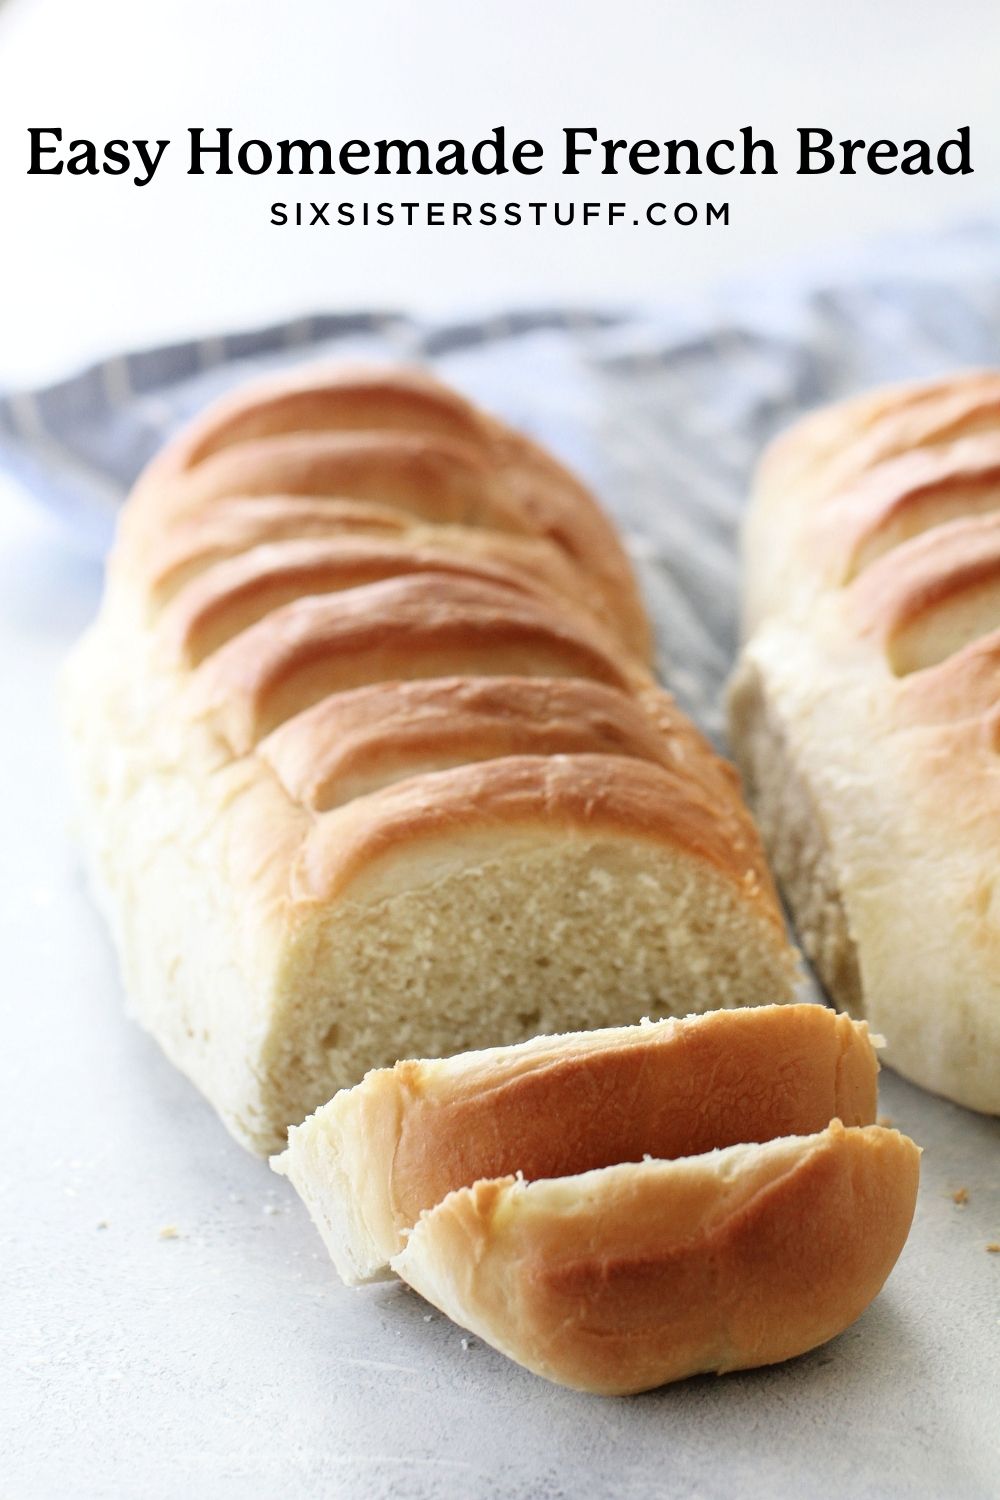 Easy Homemade French Bread Recipe
